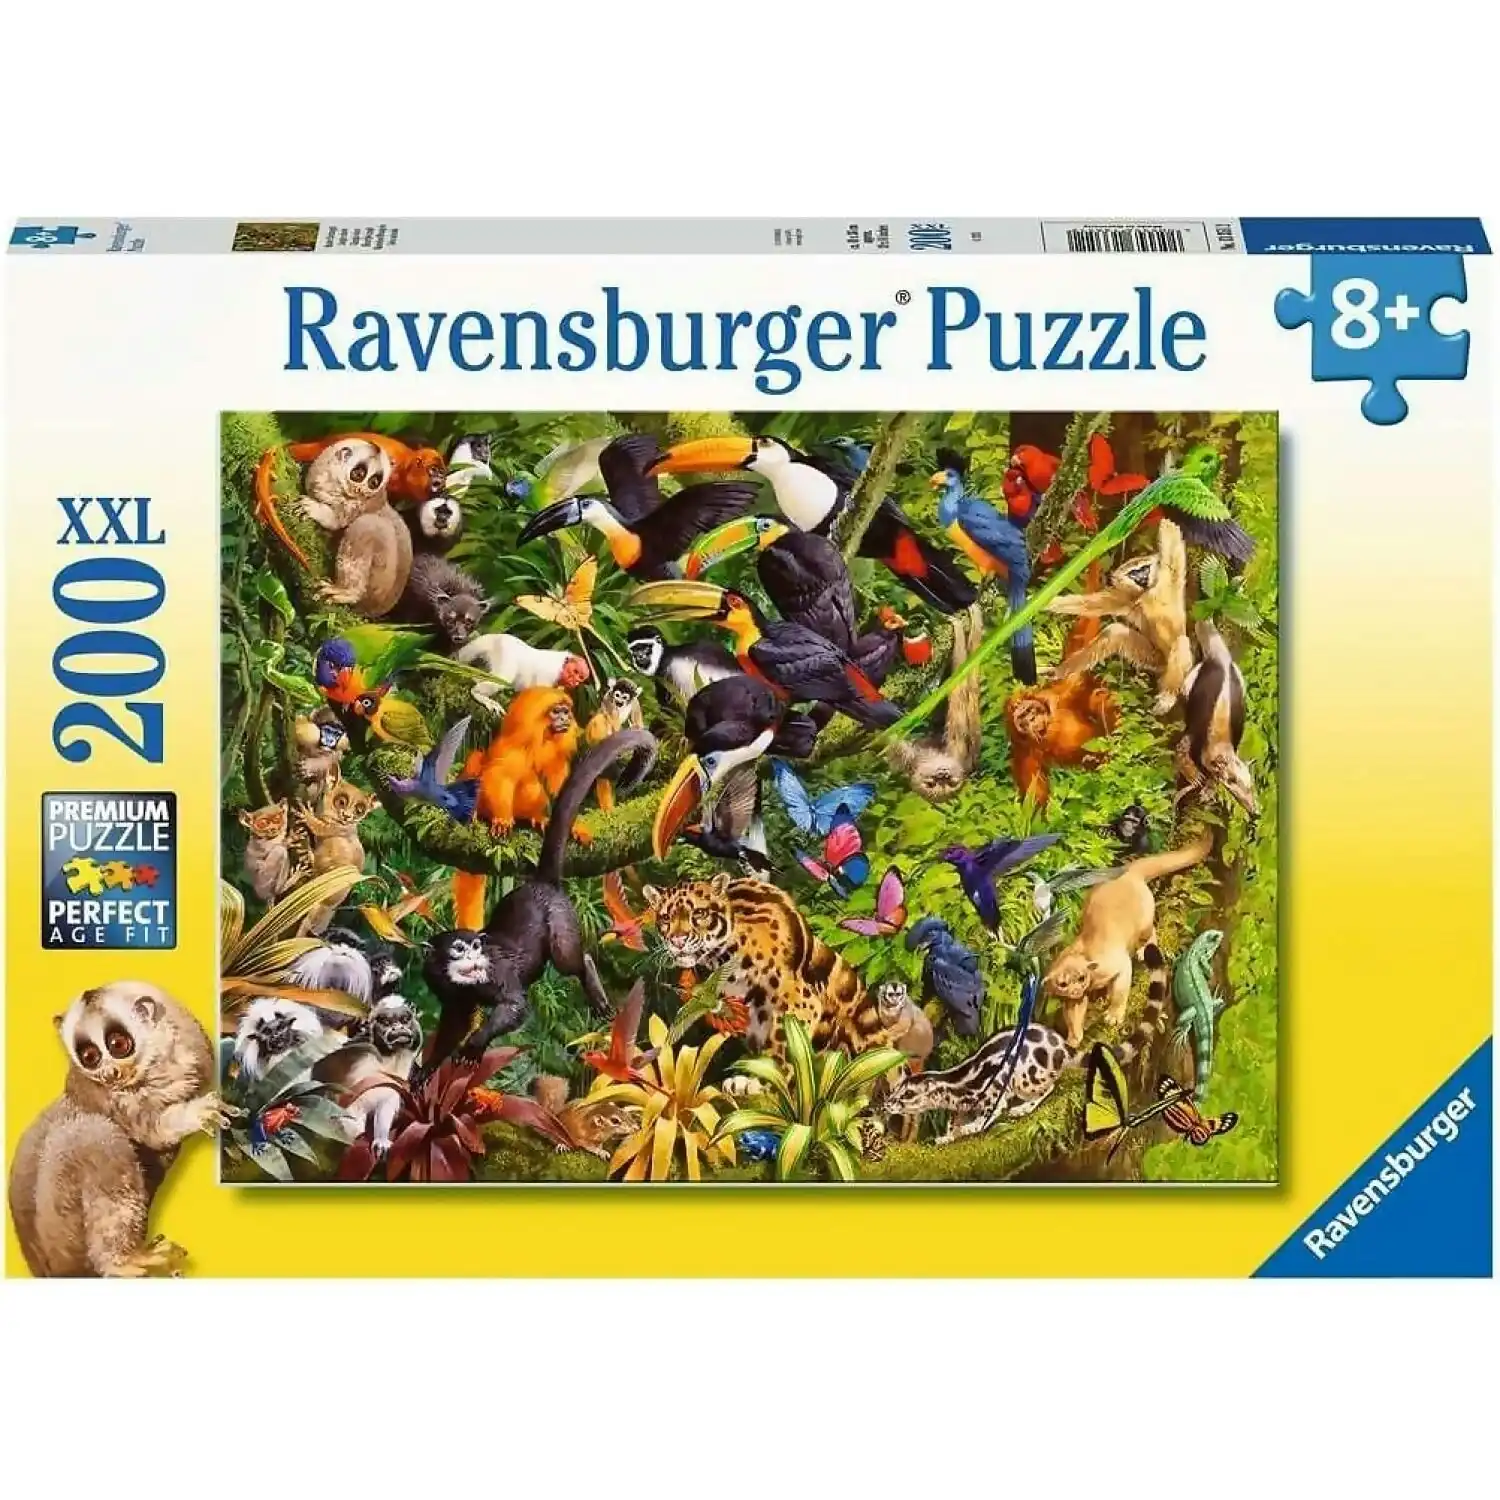 Ravensburger - Marvelous Menagerie Jigsaw Puzzle XXL 200pc